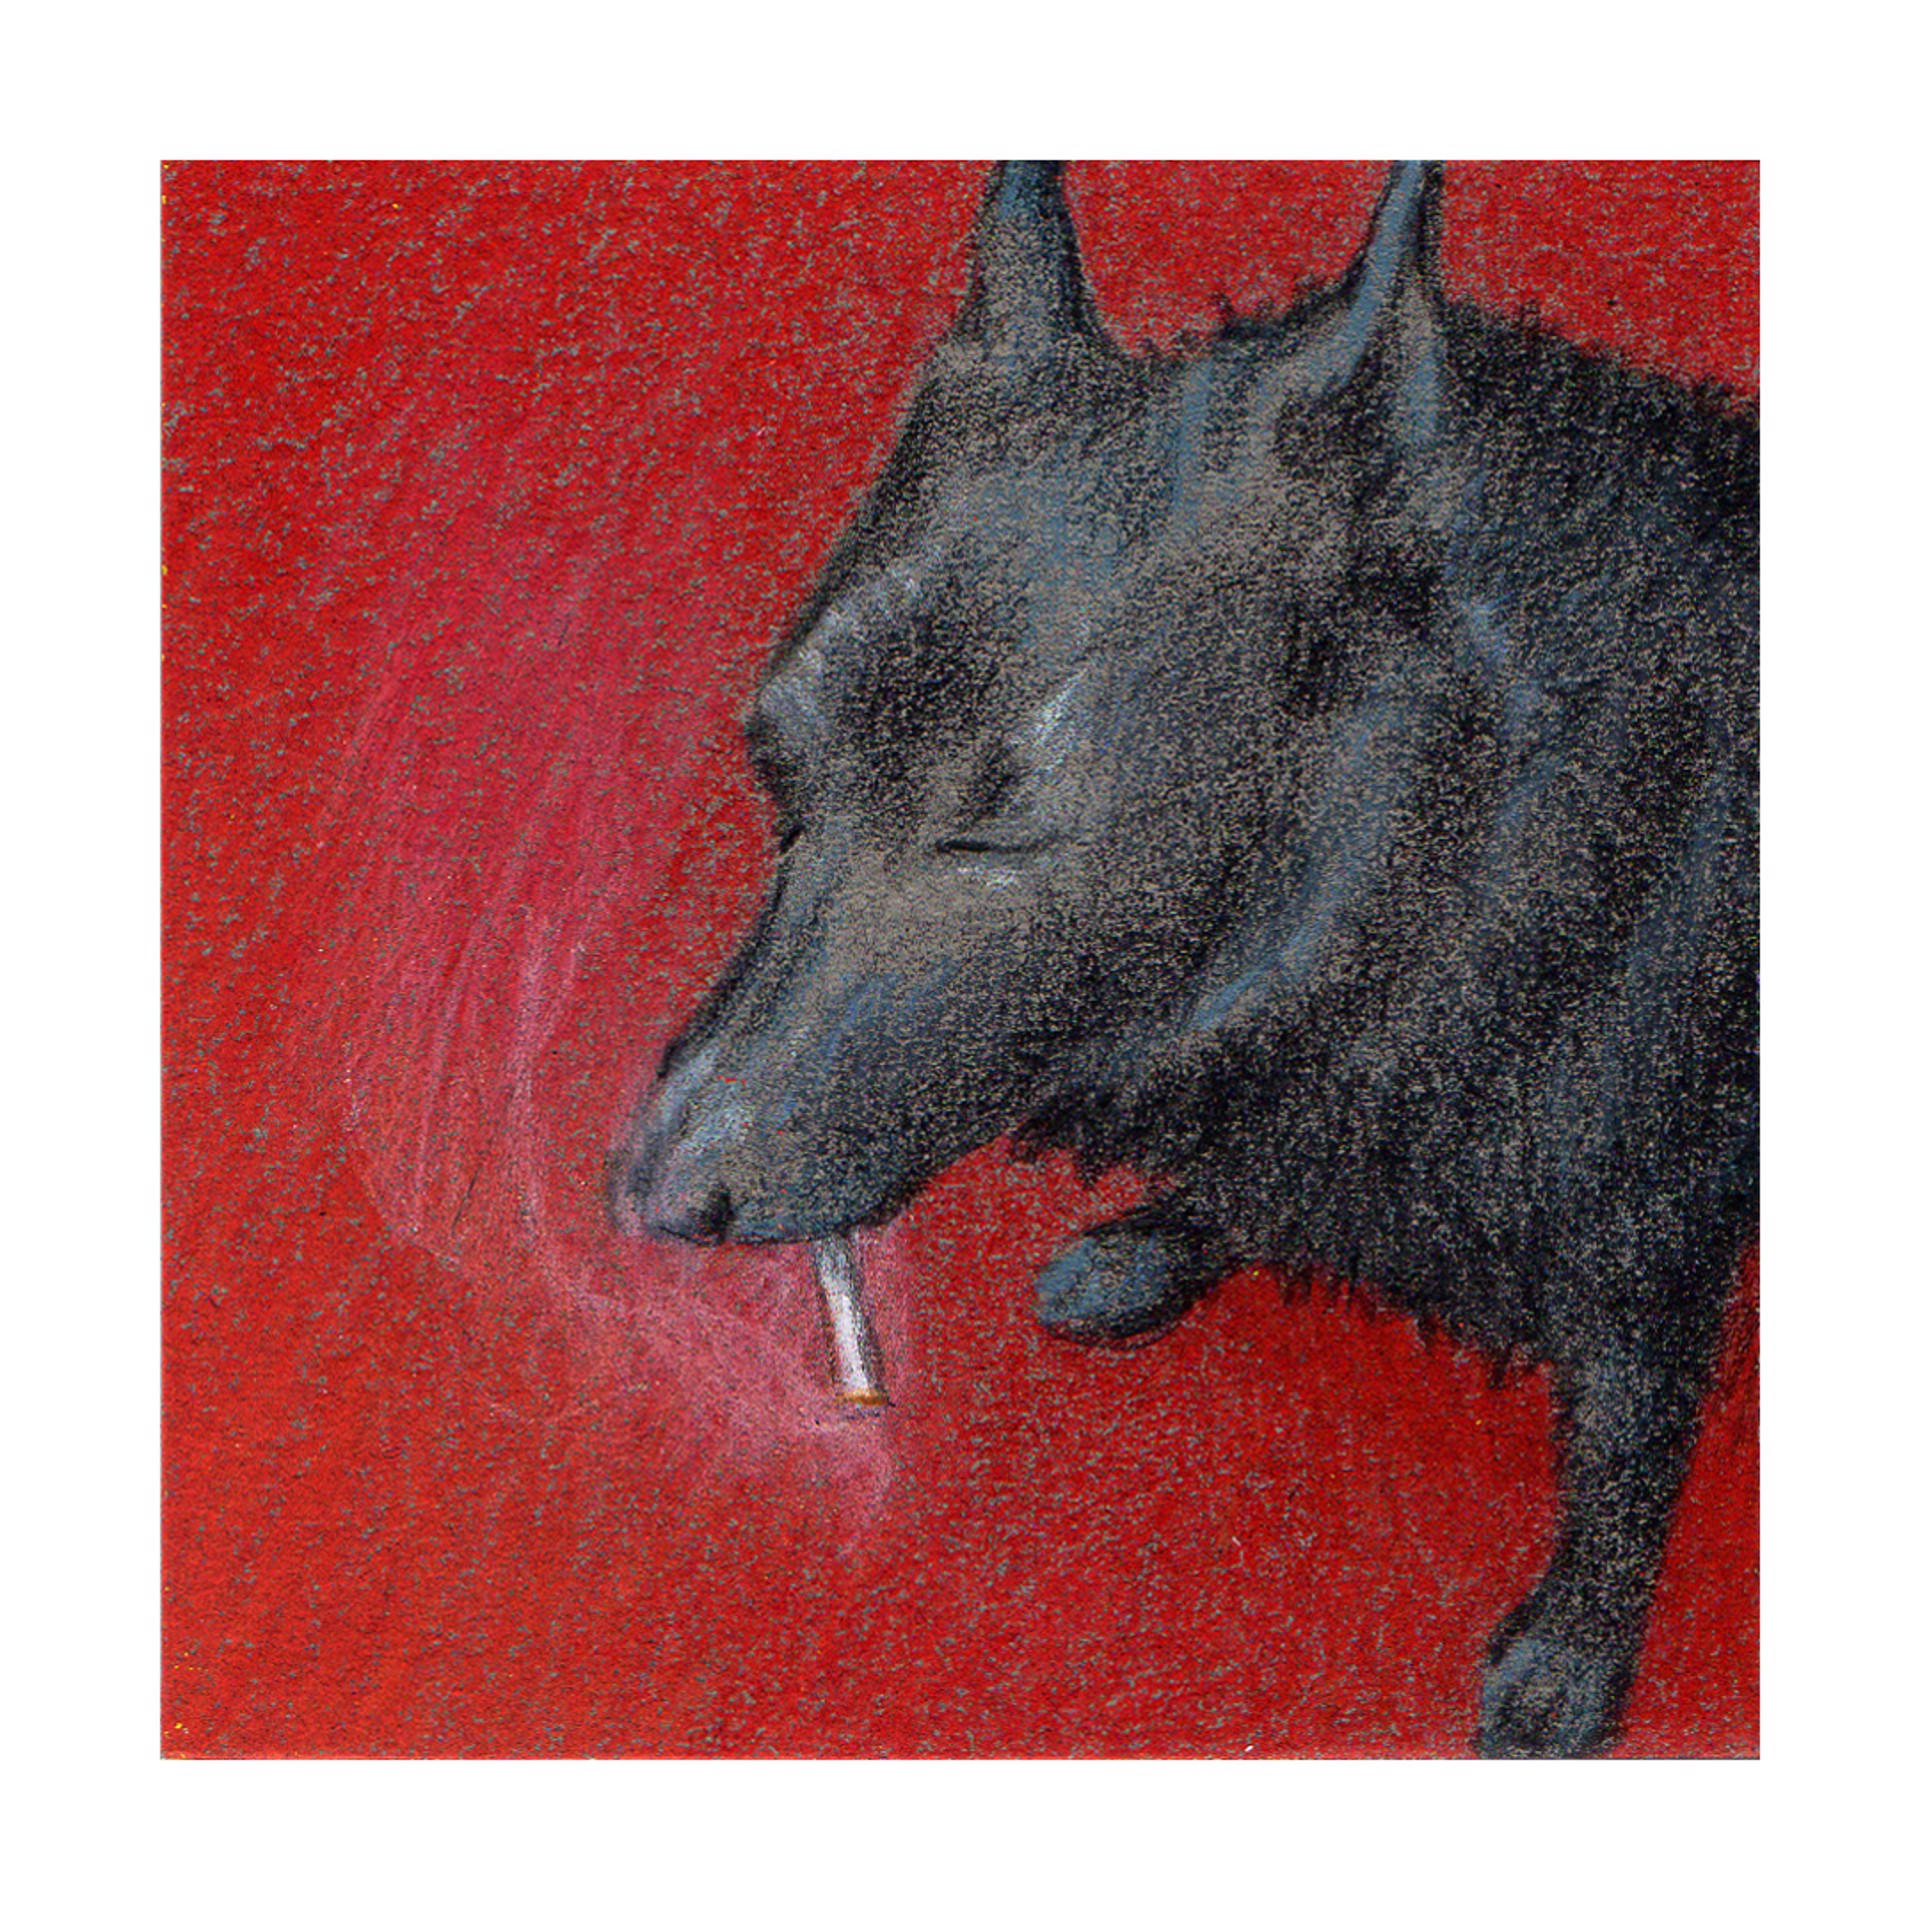 Dog Smoking a Cigarette #3 by Neva Mikulicz